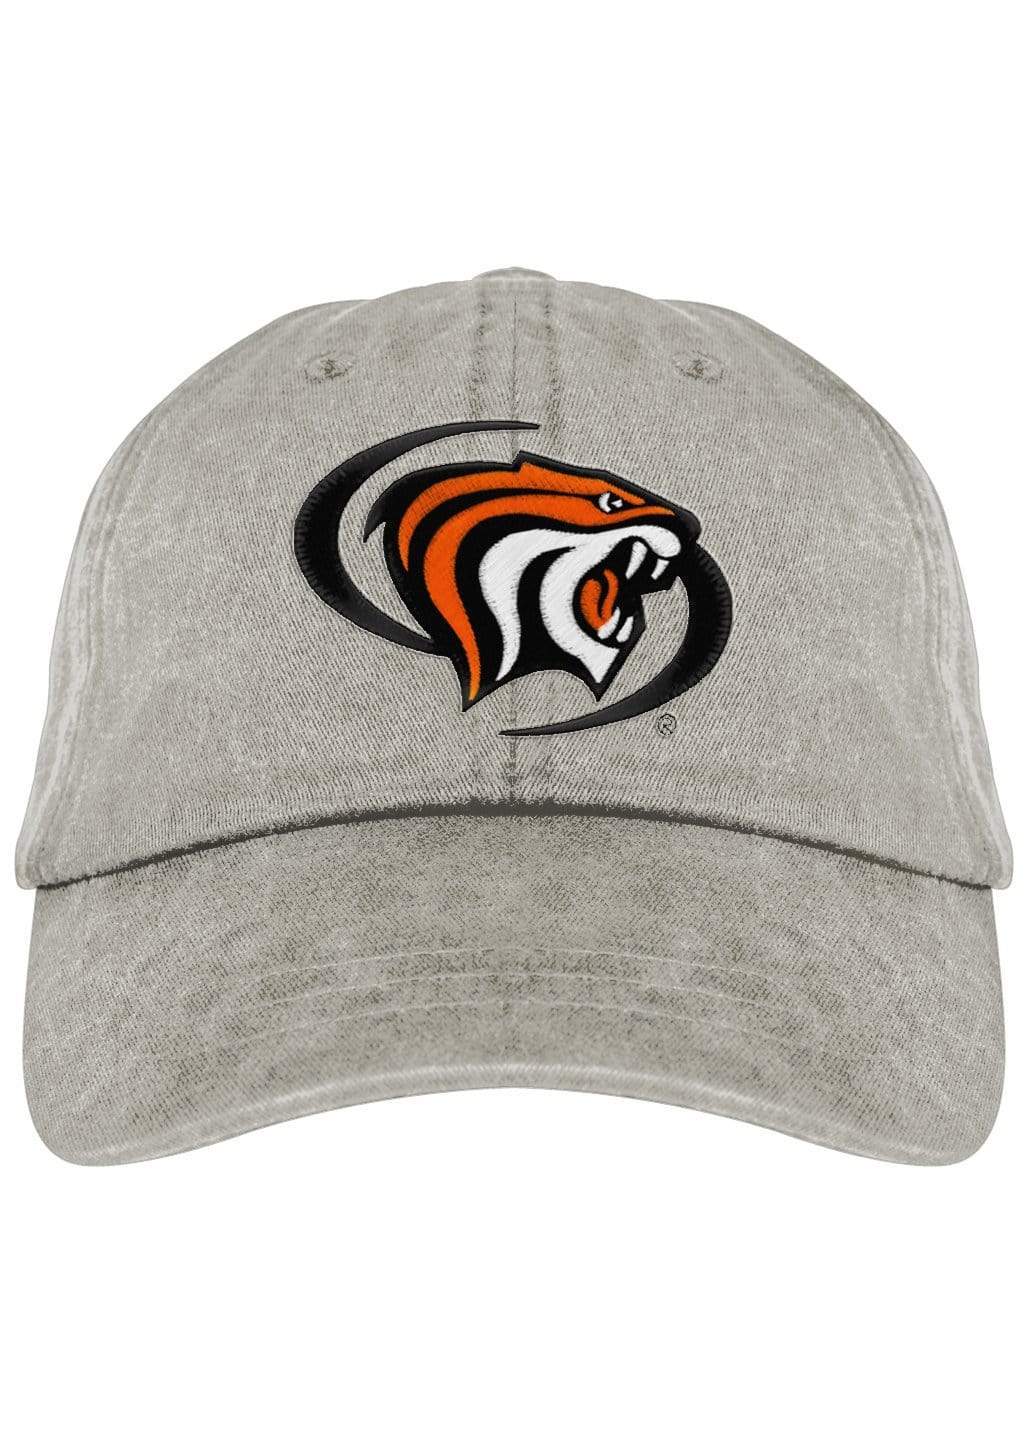 University of the Pacific Tigers Powercat Fadeaway Cap Hat by Zeus Collegiate